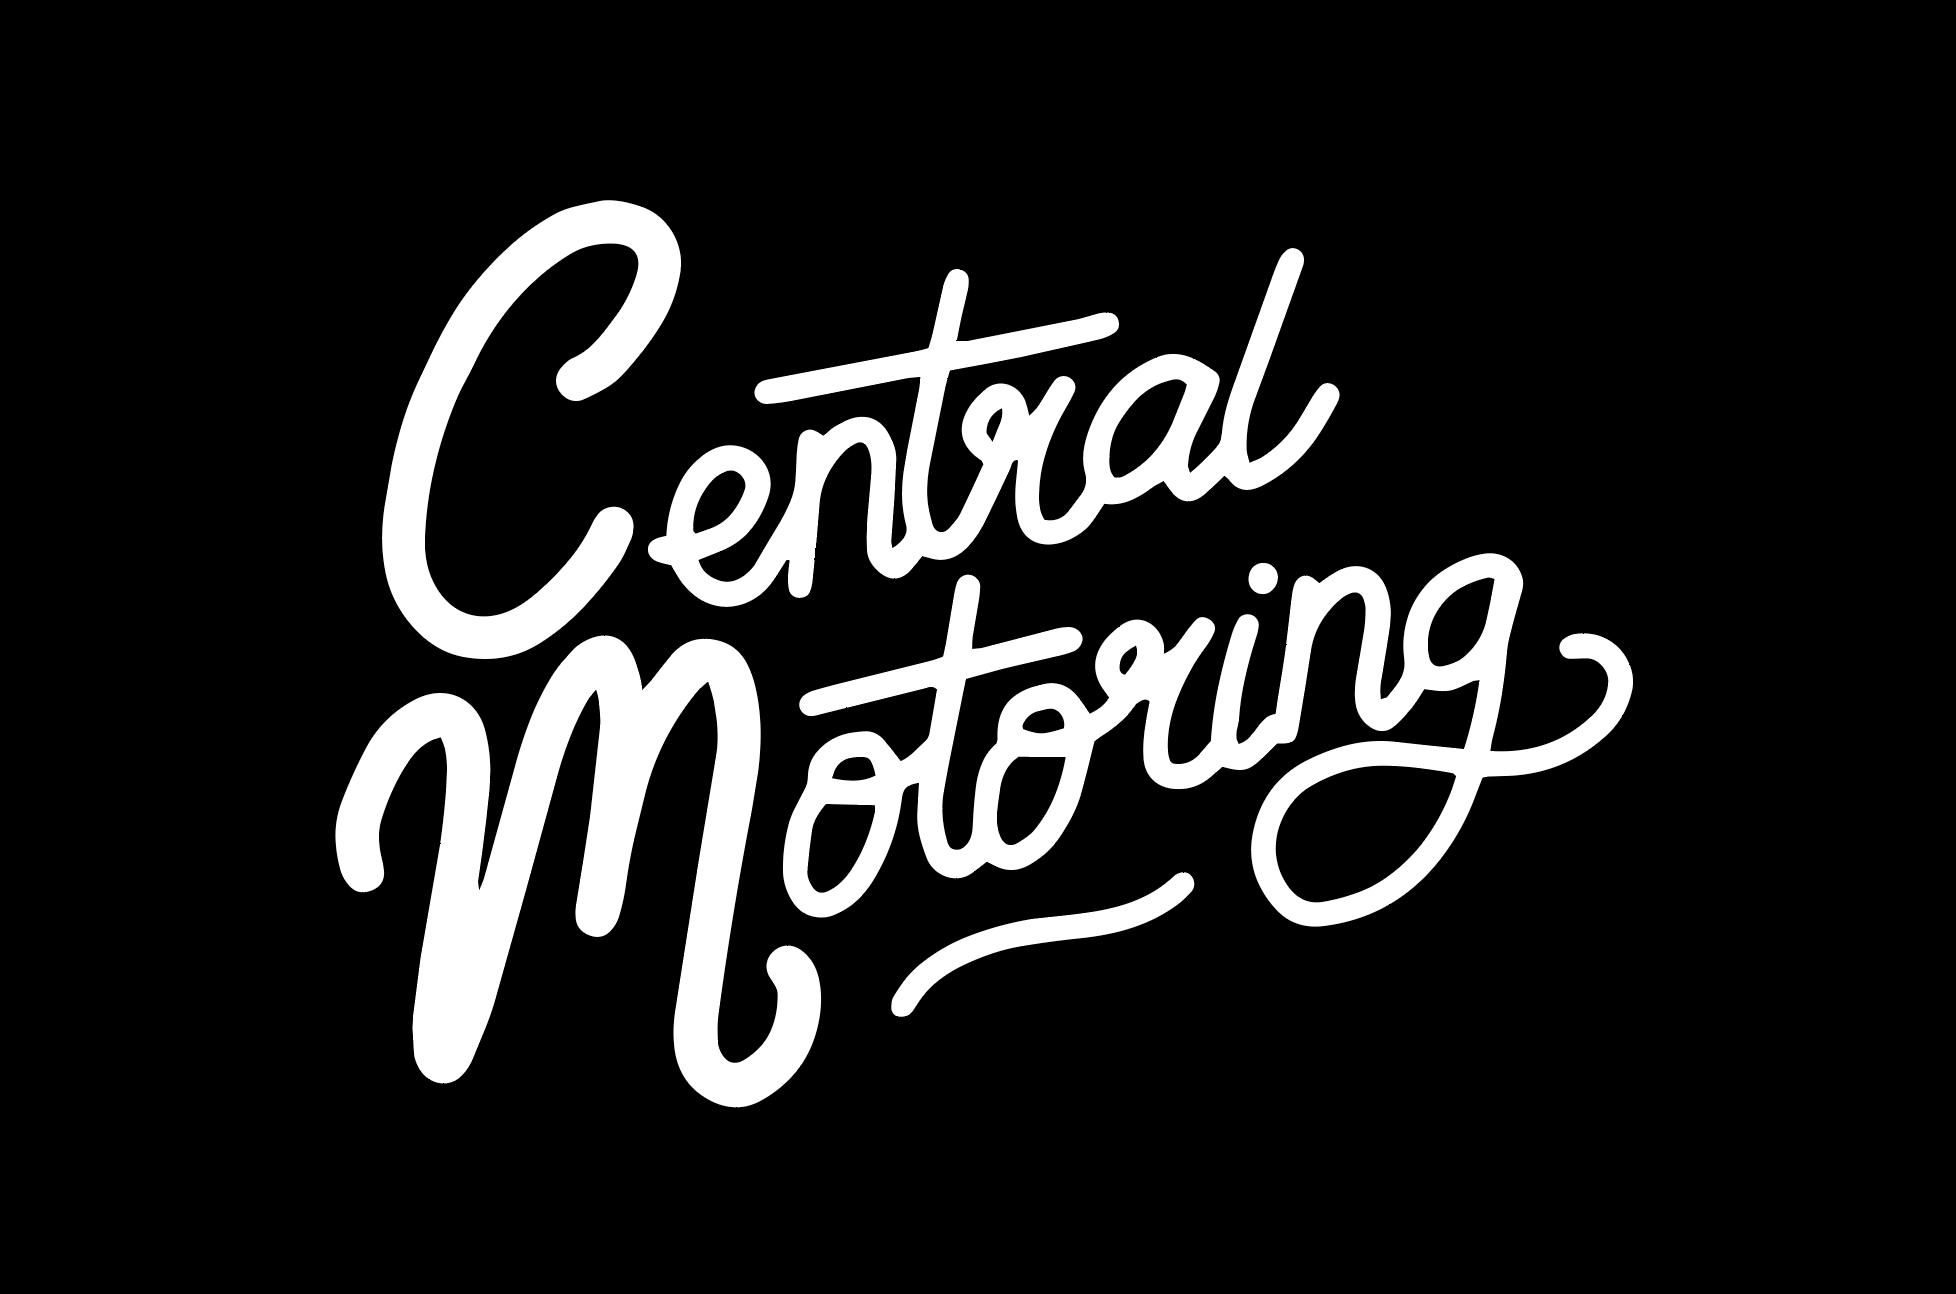 Central Motoring